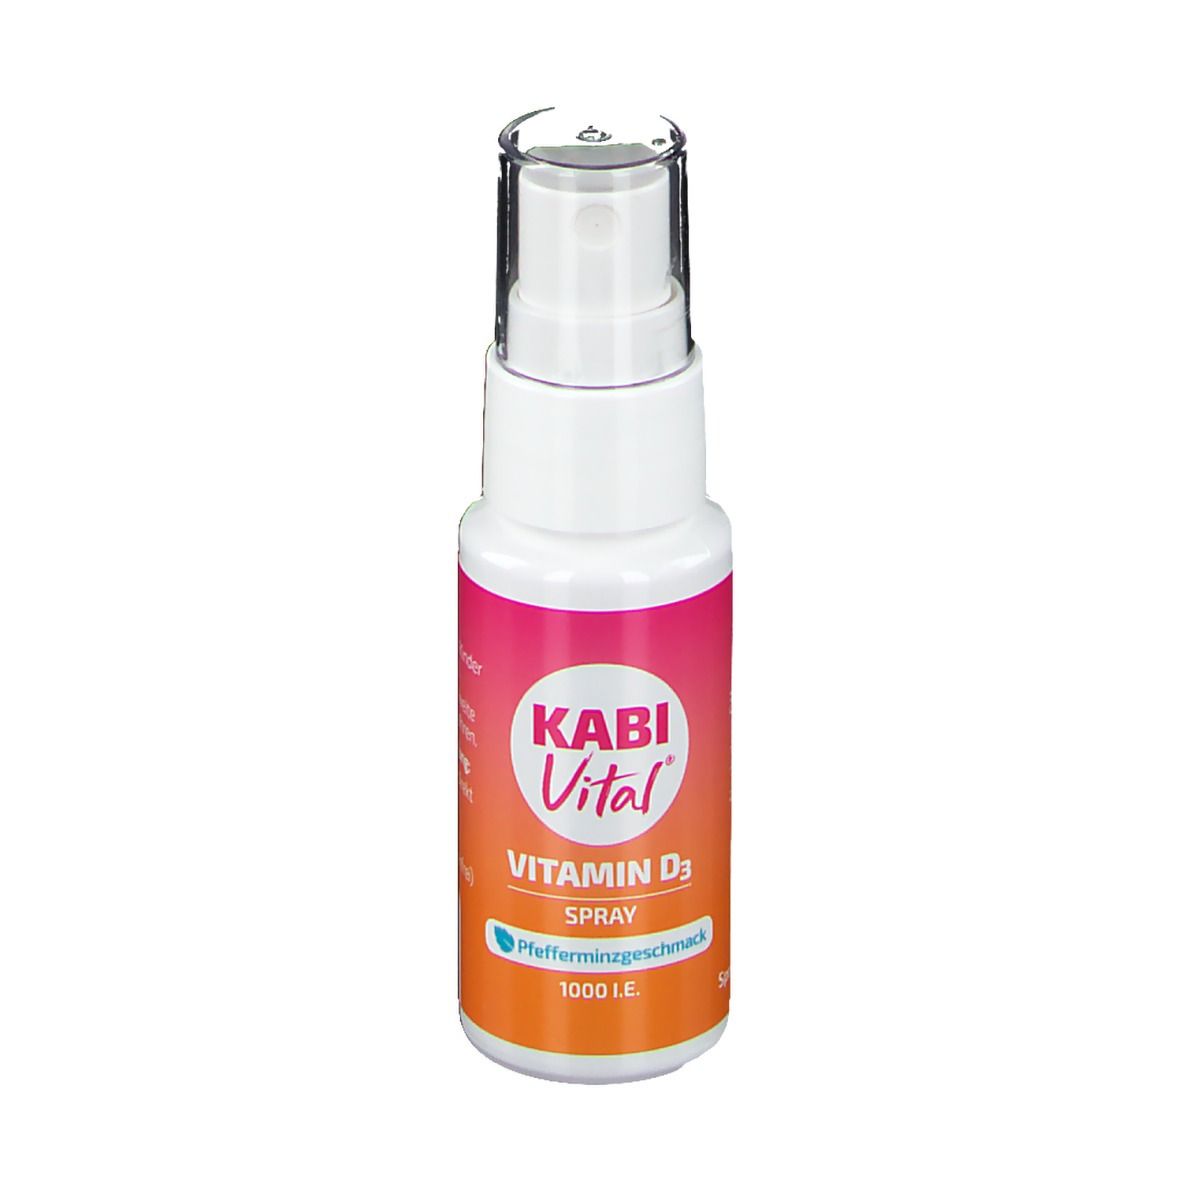 KabiVital® 1000 I.e. Vitamin D3 Pfefferminzgeschmack